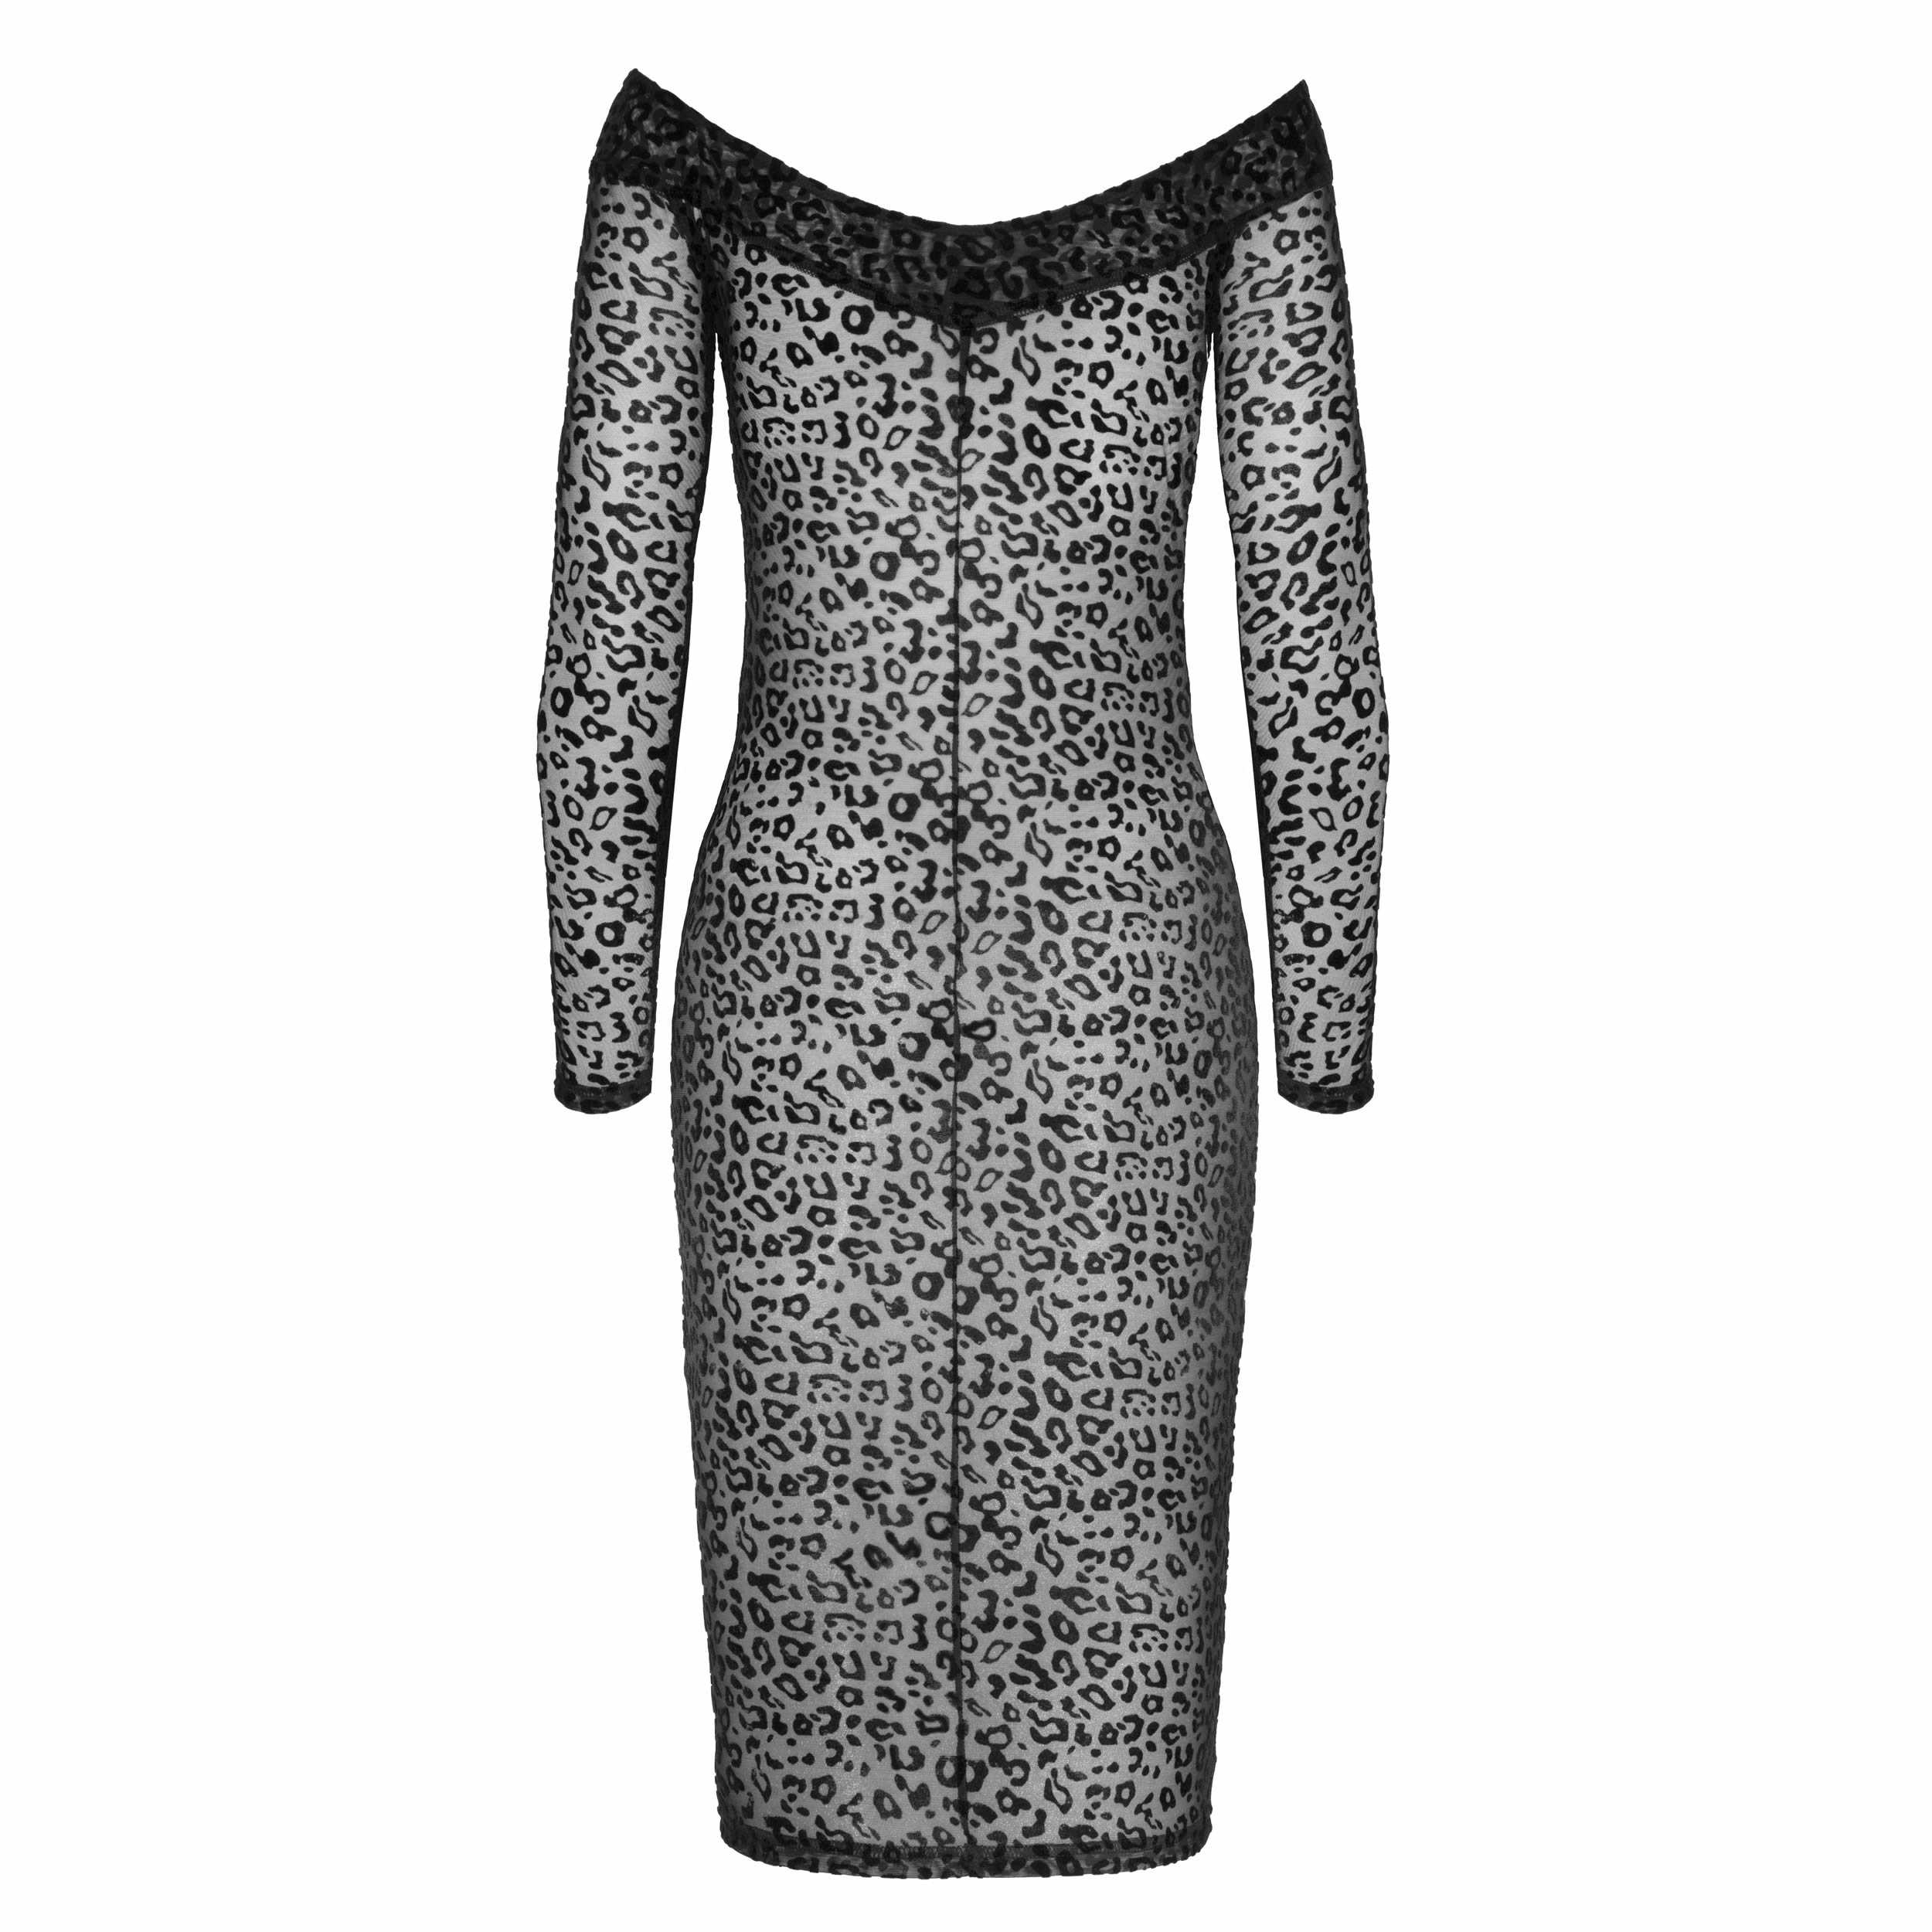 Noir Leopard Nylon Dress with Flock Print and Lace Neckline